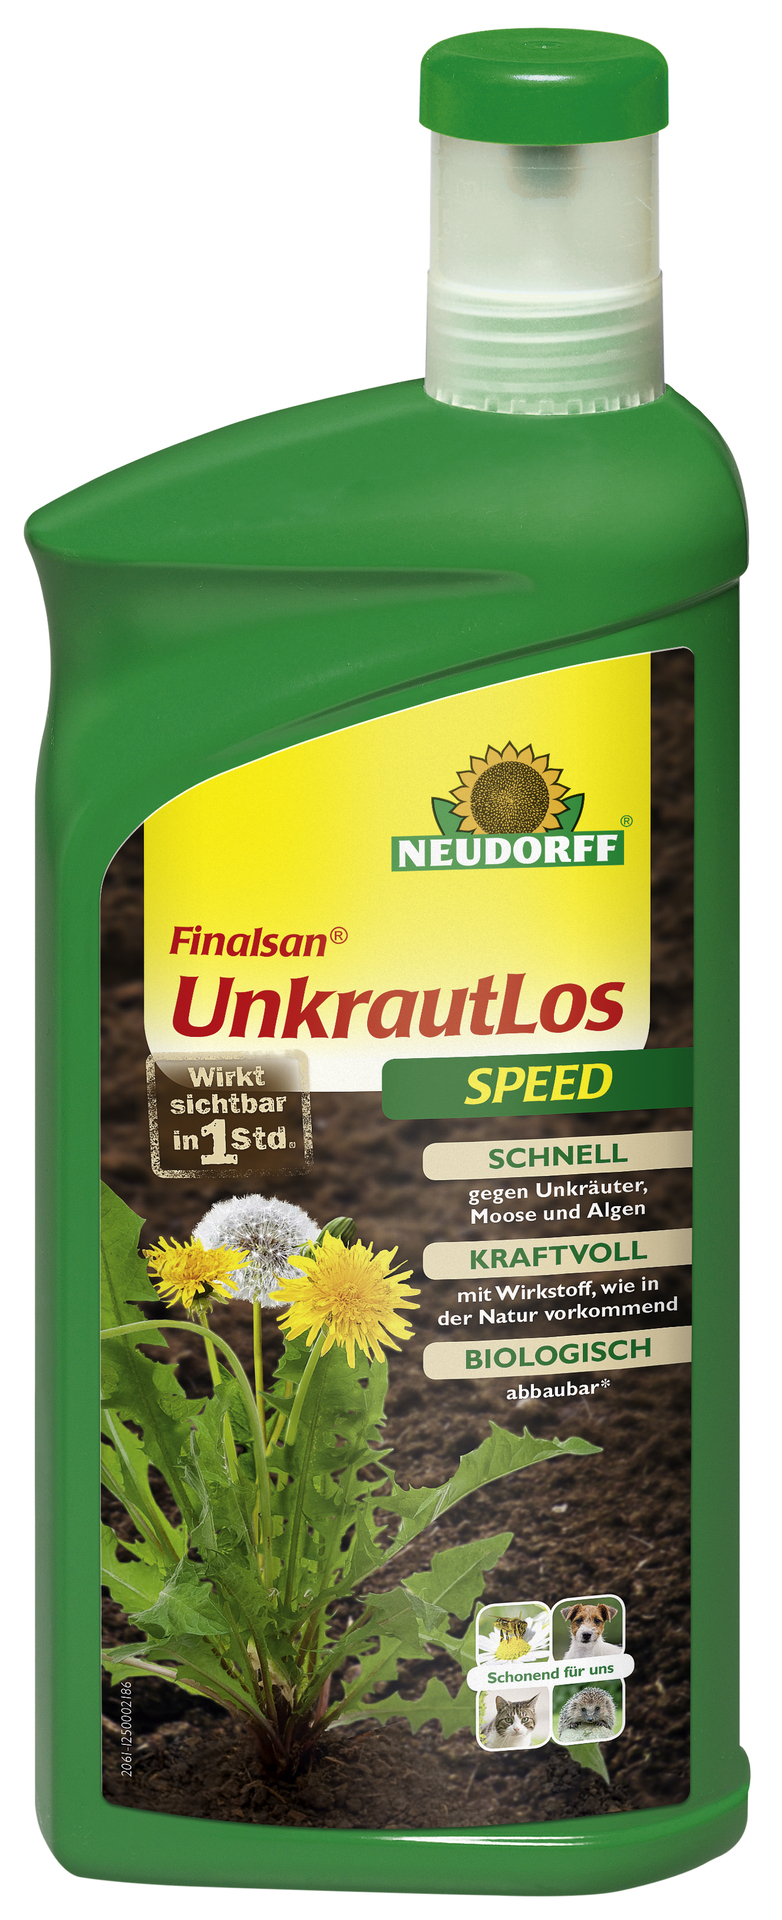 W. Neudorff GmbH KG Finalsan UnkrautLos Speed